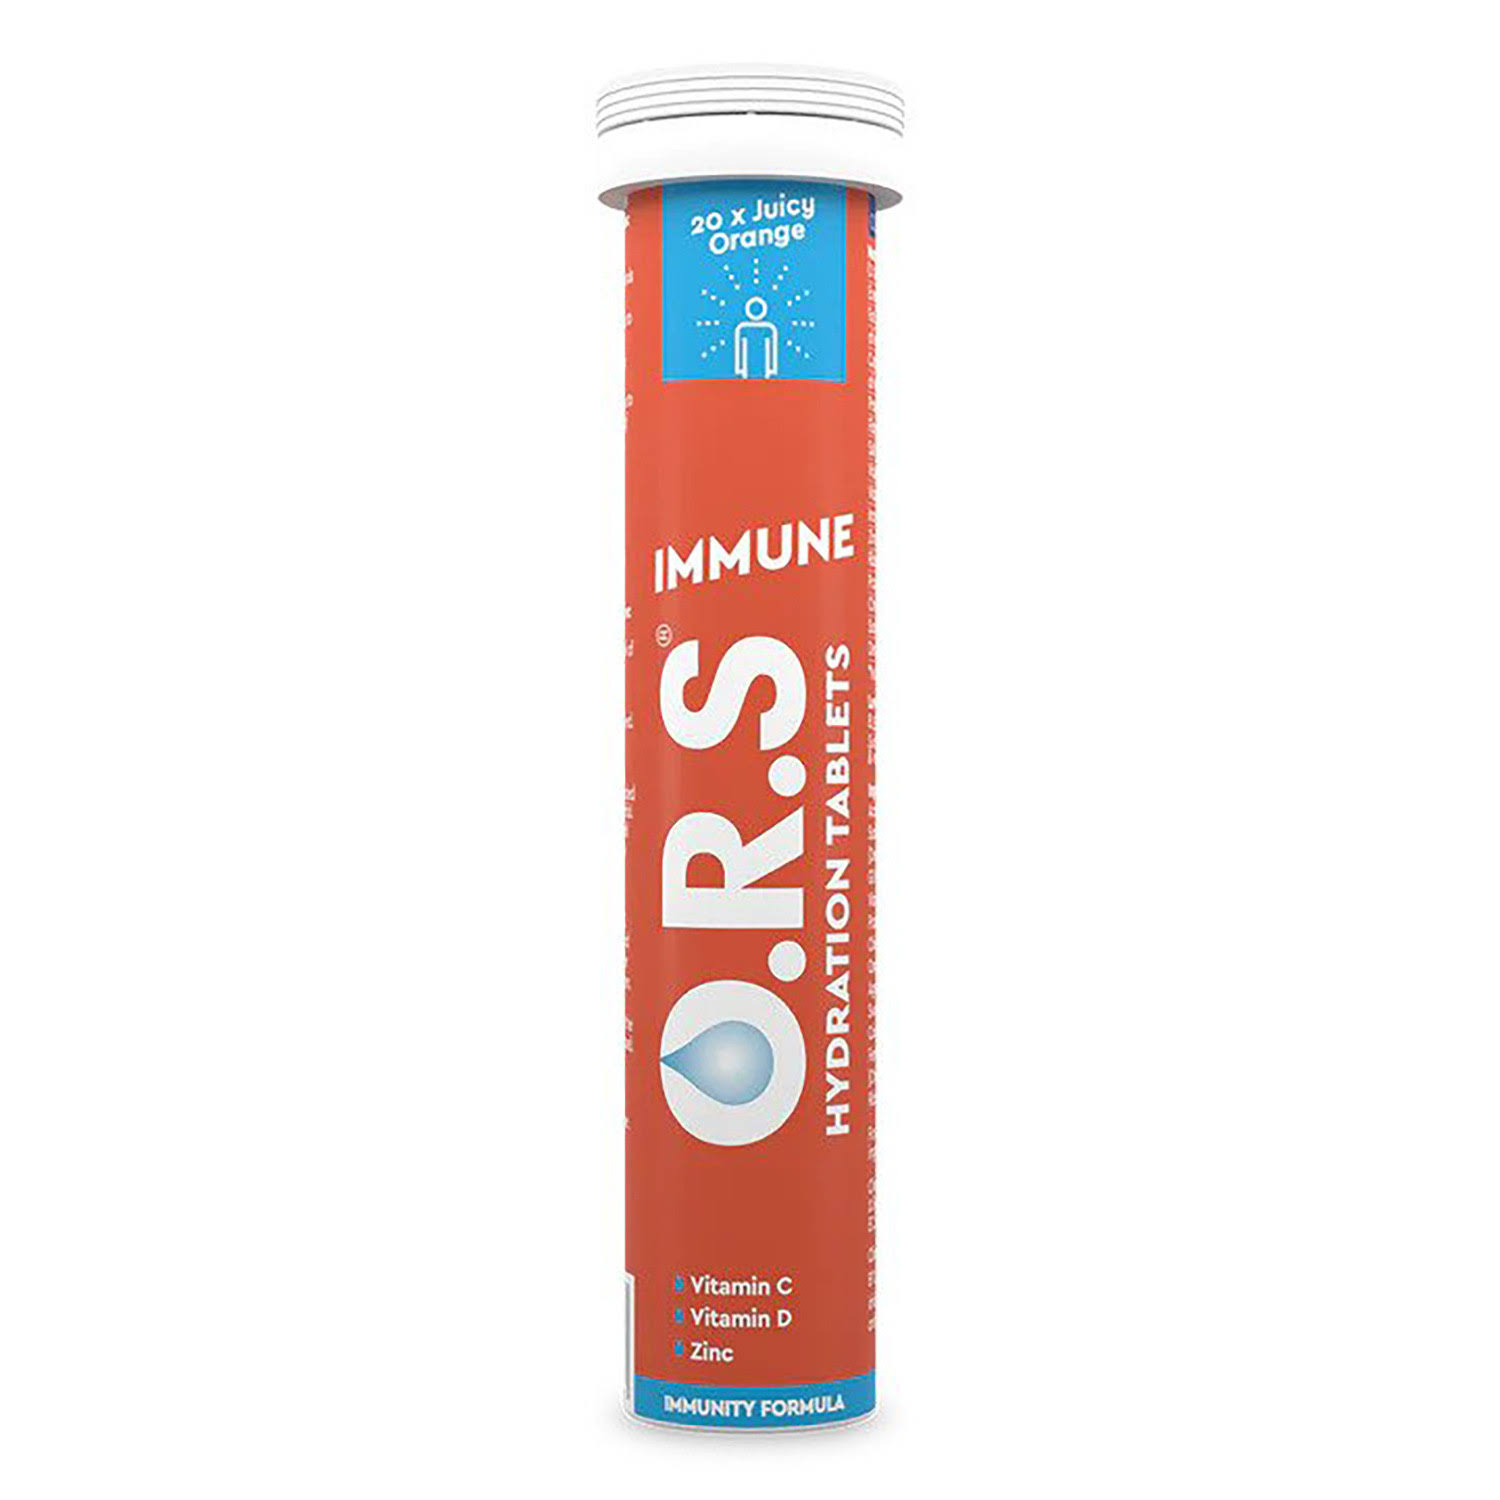 ORS Immune Orange 20 Tablets